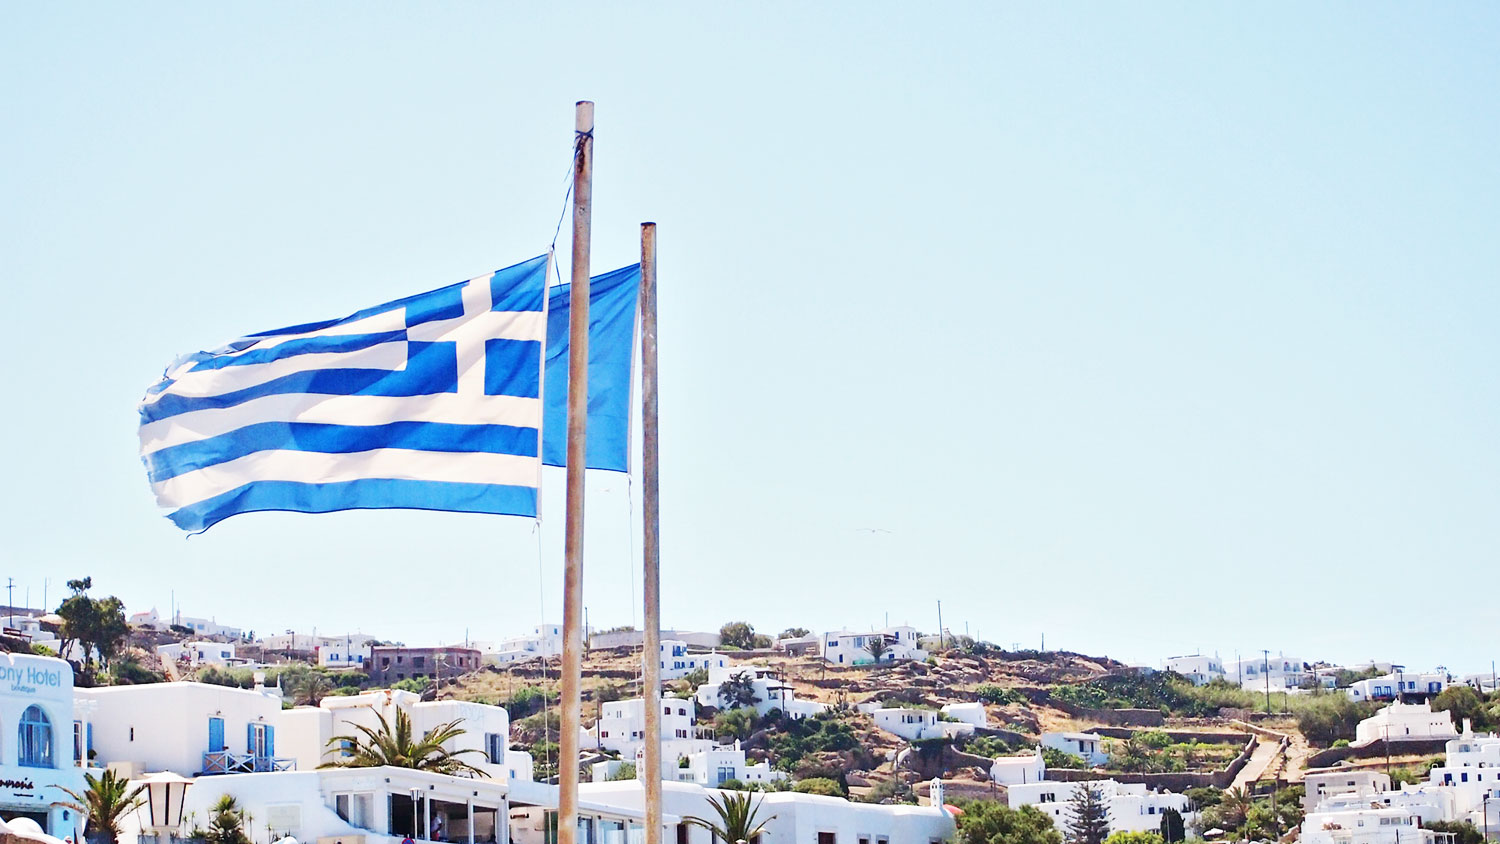 Mykonos, Greece - Celebrity Cruise Vacation